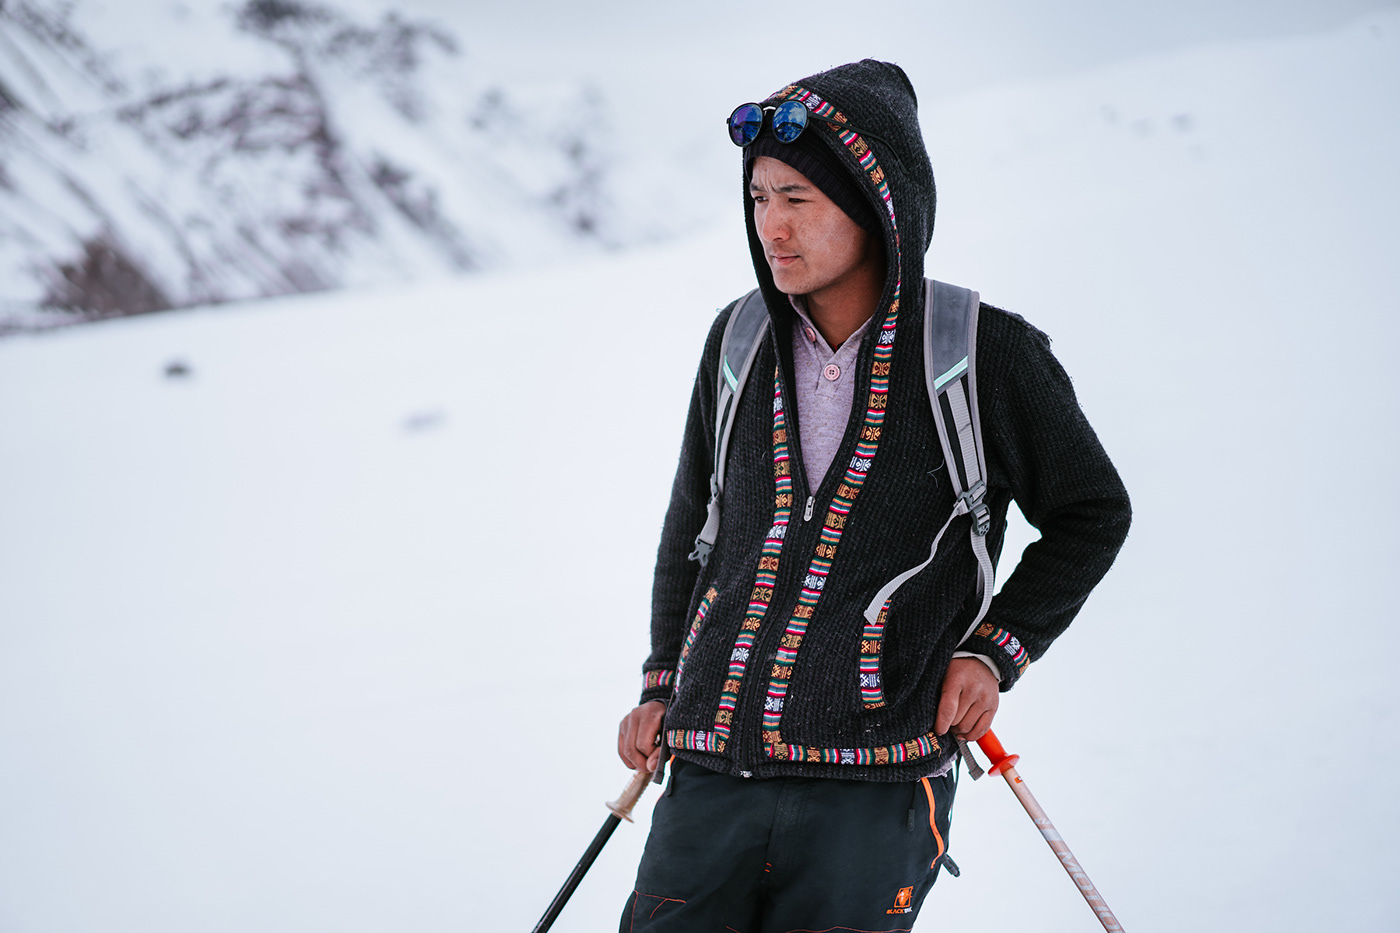 alpine HImachal Pradesh himalayas India skiing Spiti winter sport